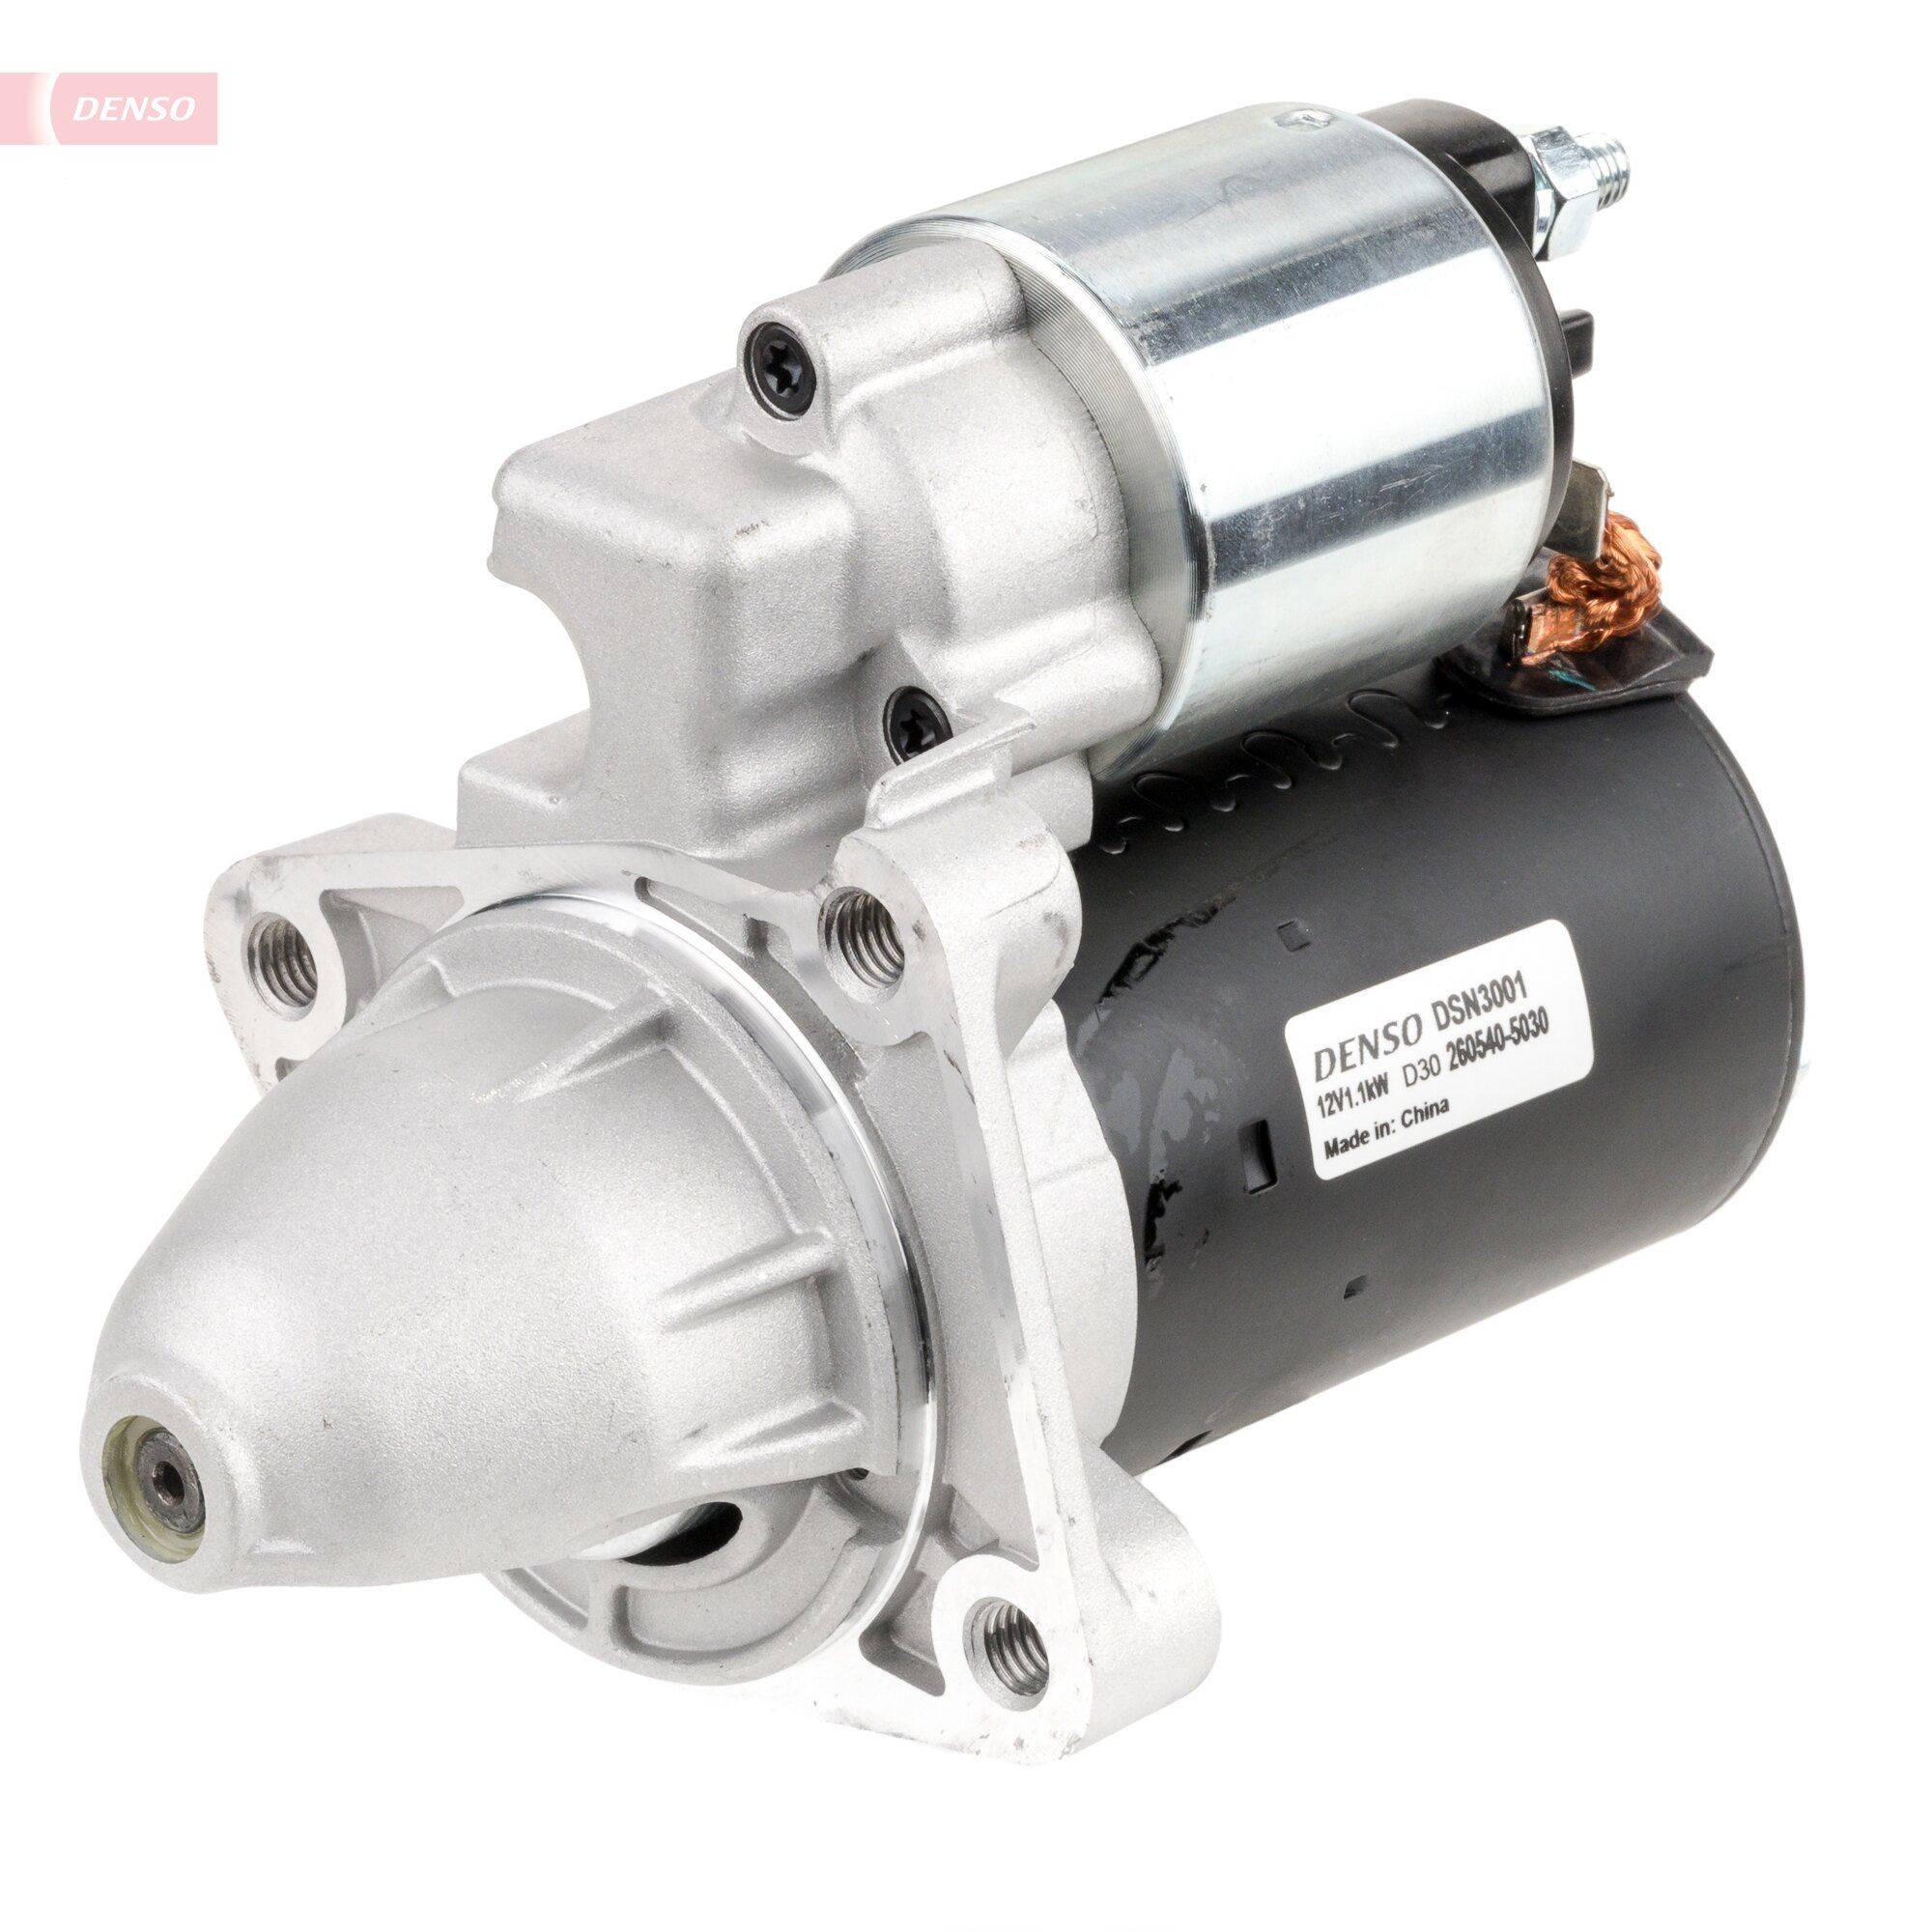 DENSO DSN3001 Starter motor YS4U-11000-BB